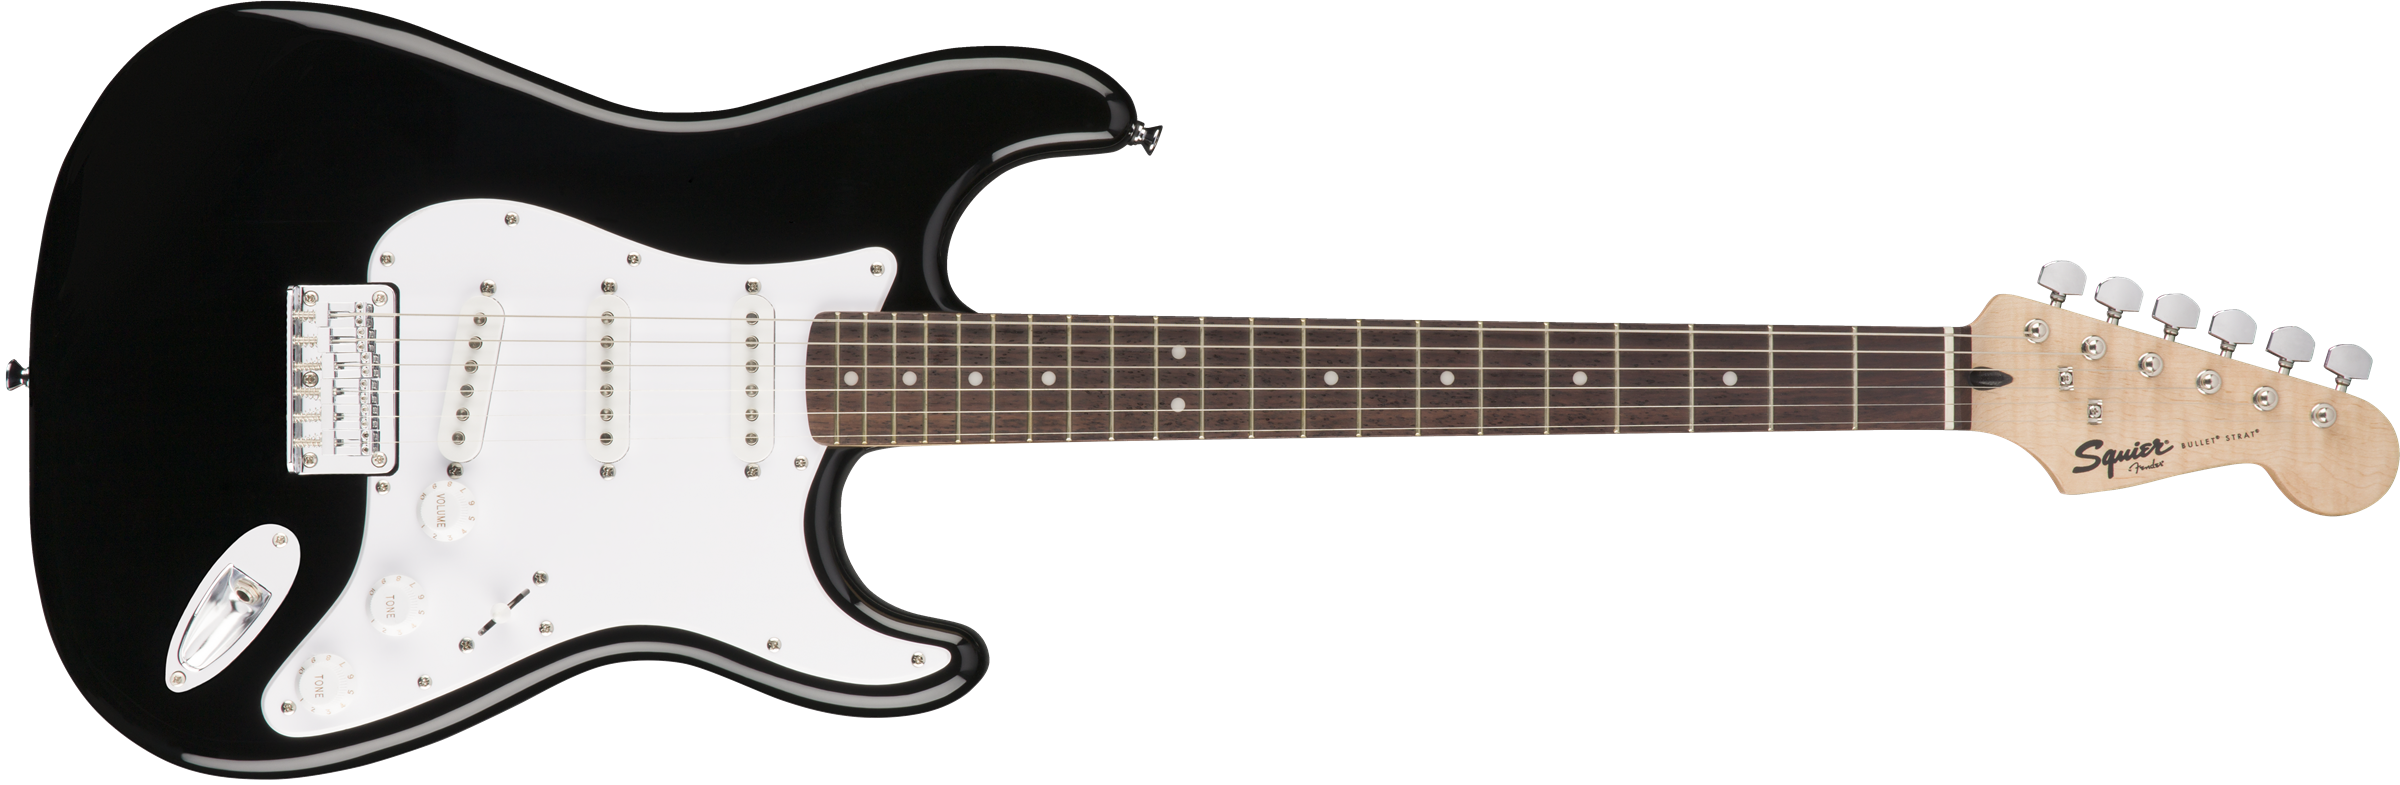 Squier Bullet Strat Hard Tail SSS Black Electric Guitar 0371001506